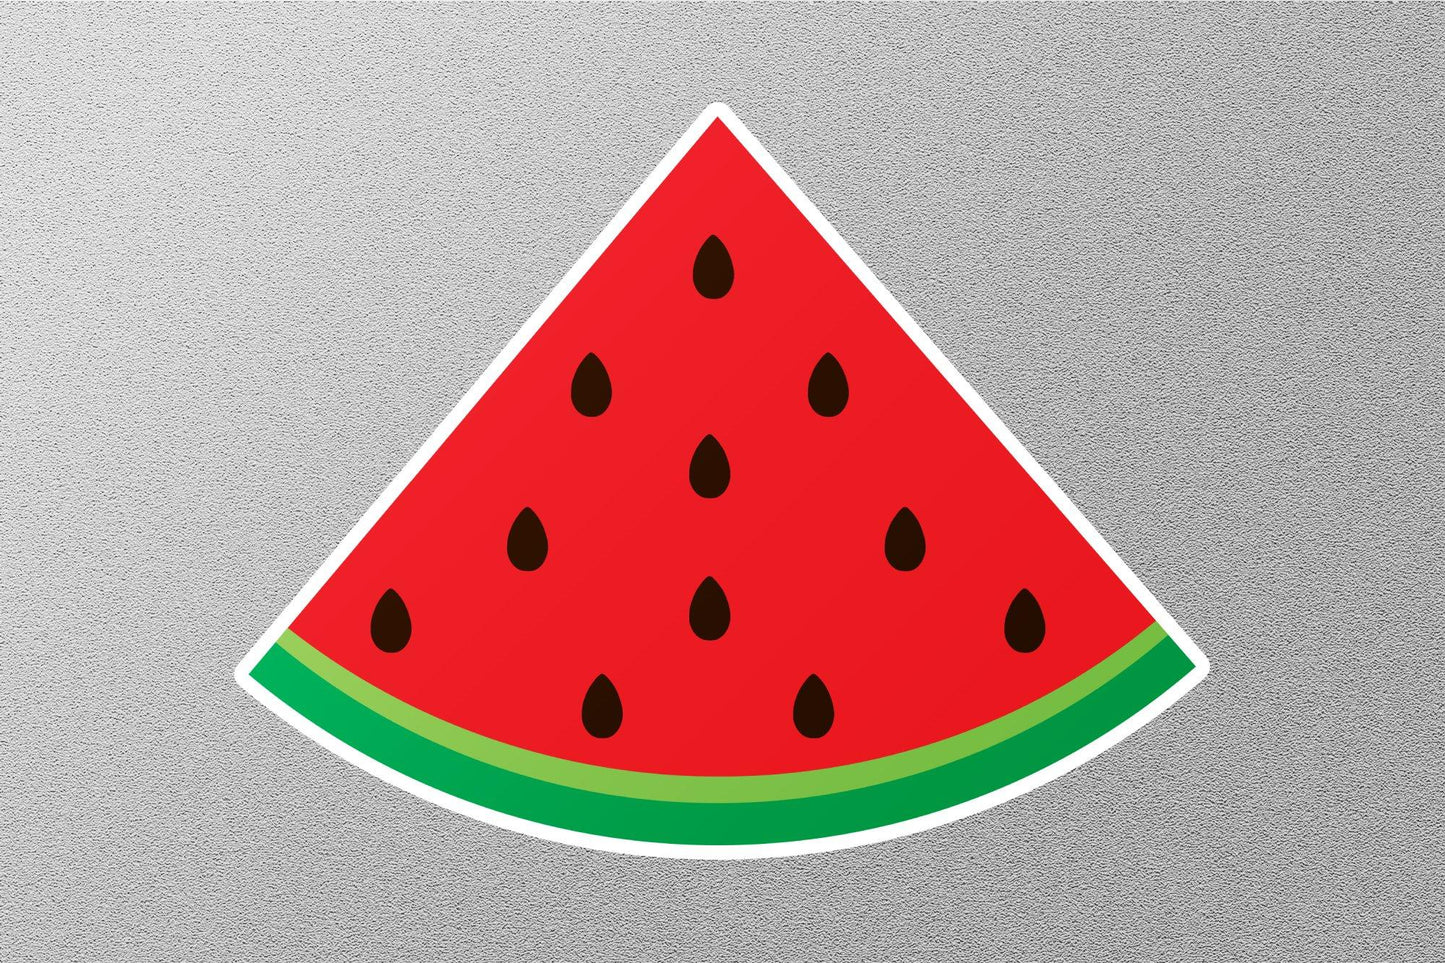 Slice of Watermelon Sticker